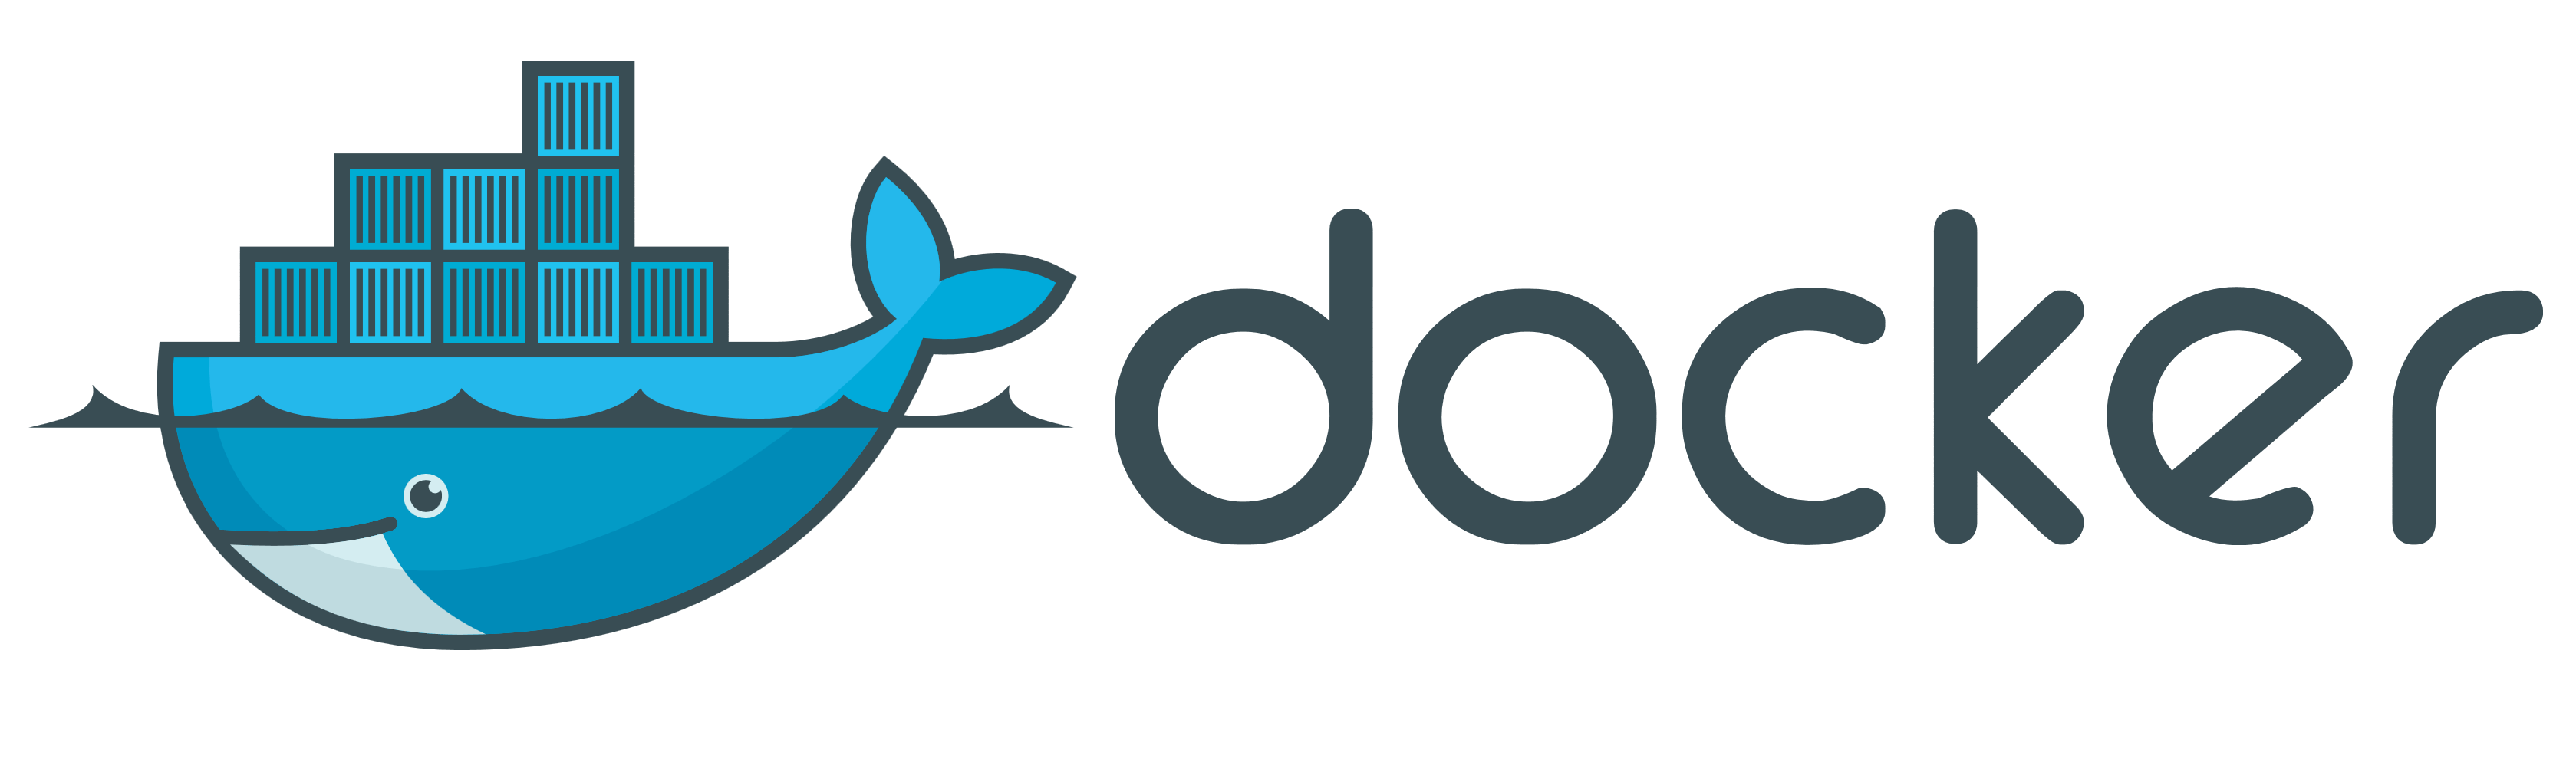 Docker logo horizontal